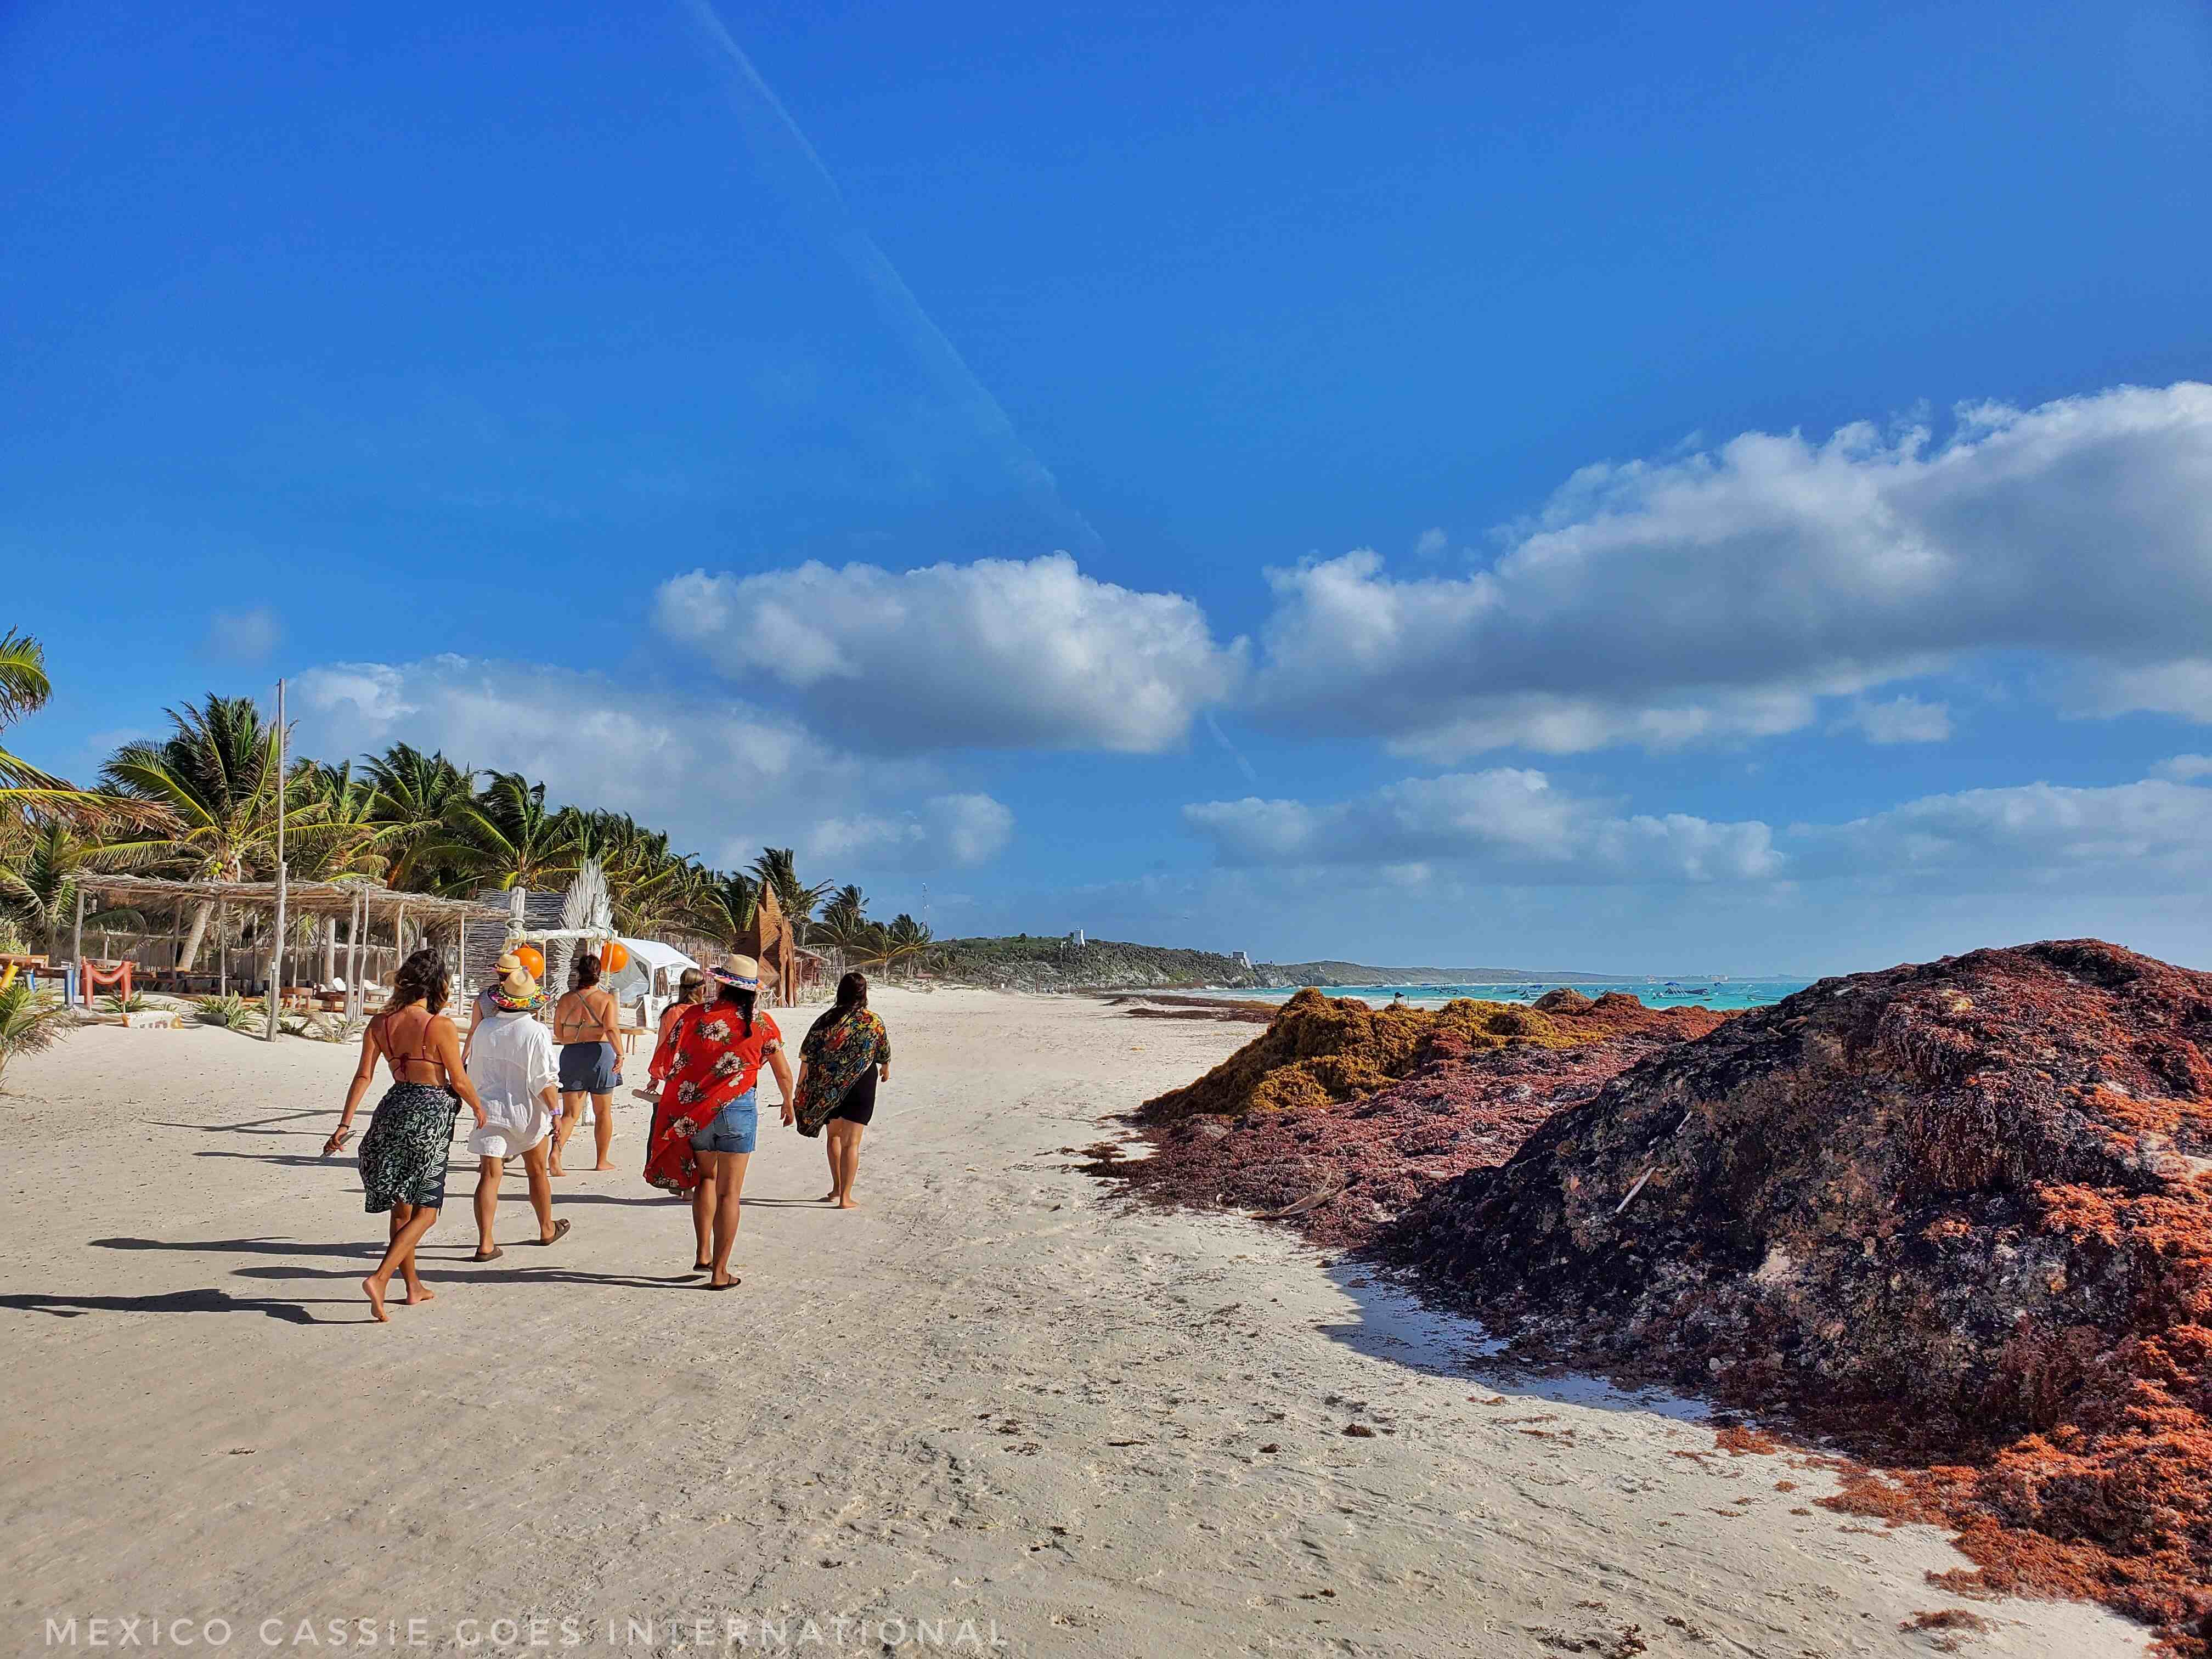 group of women walking on beach next to piles of seaweed